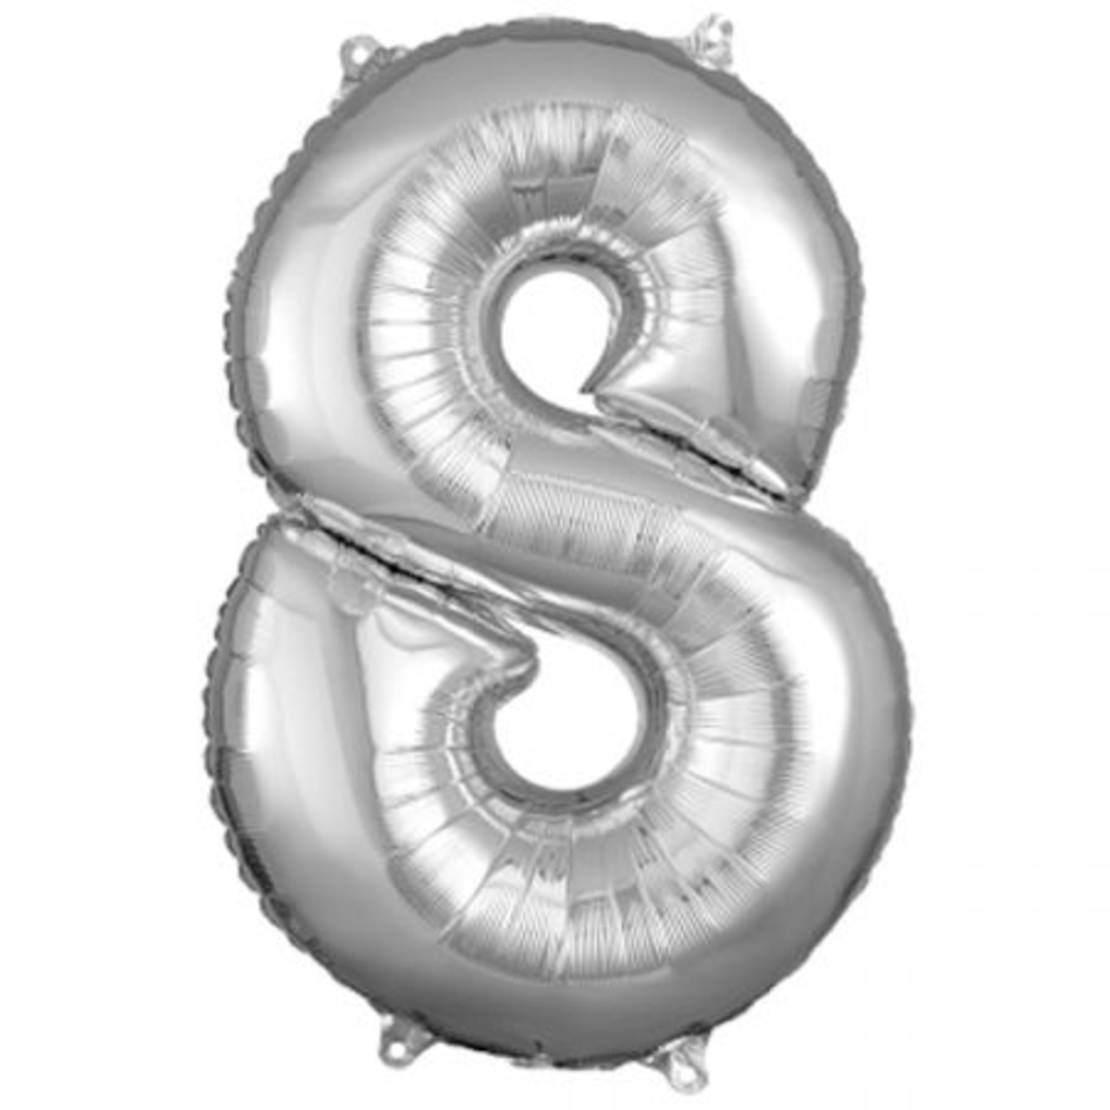 Digit Balloon - 8 - Silver